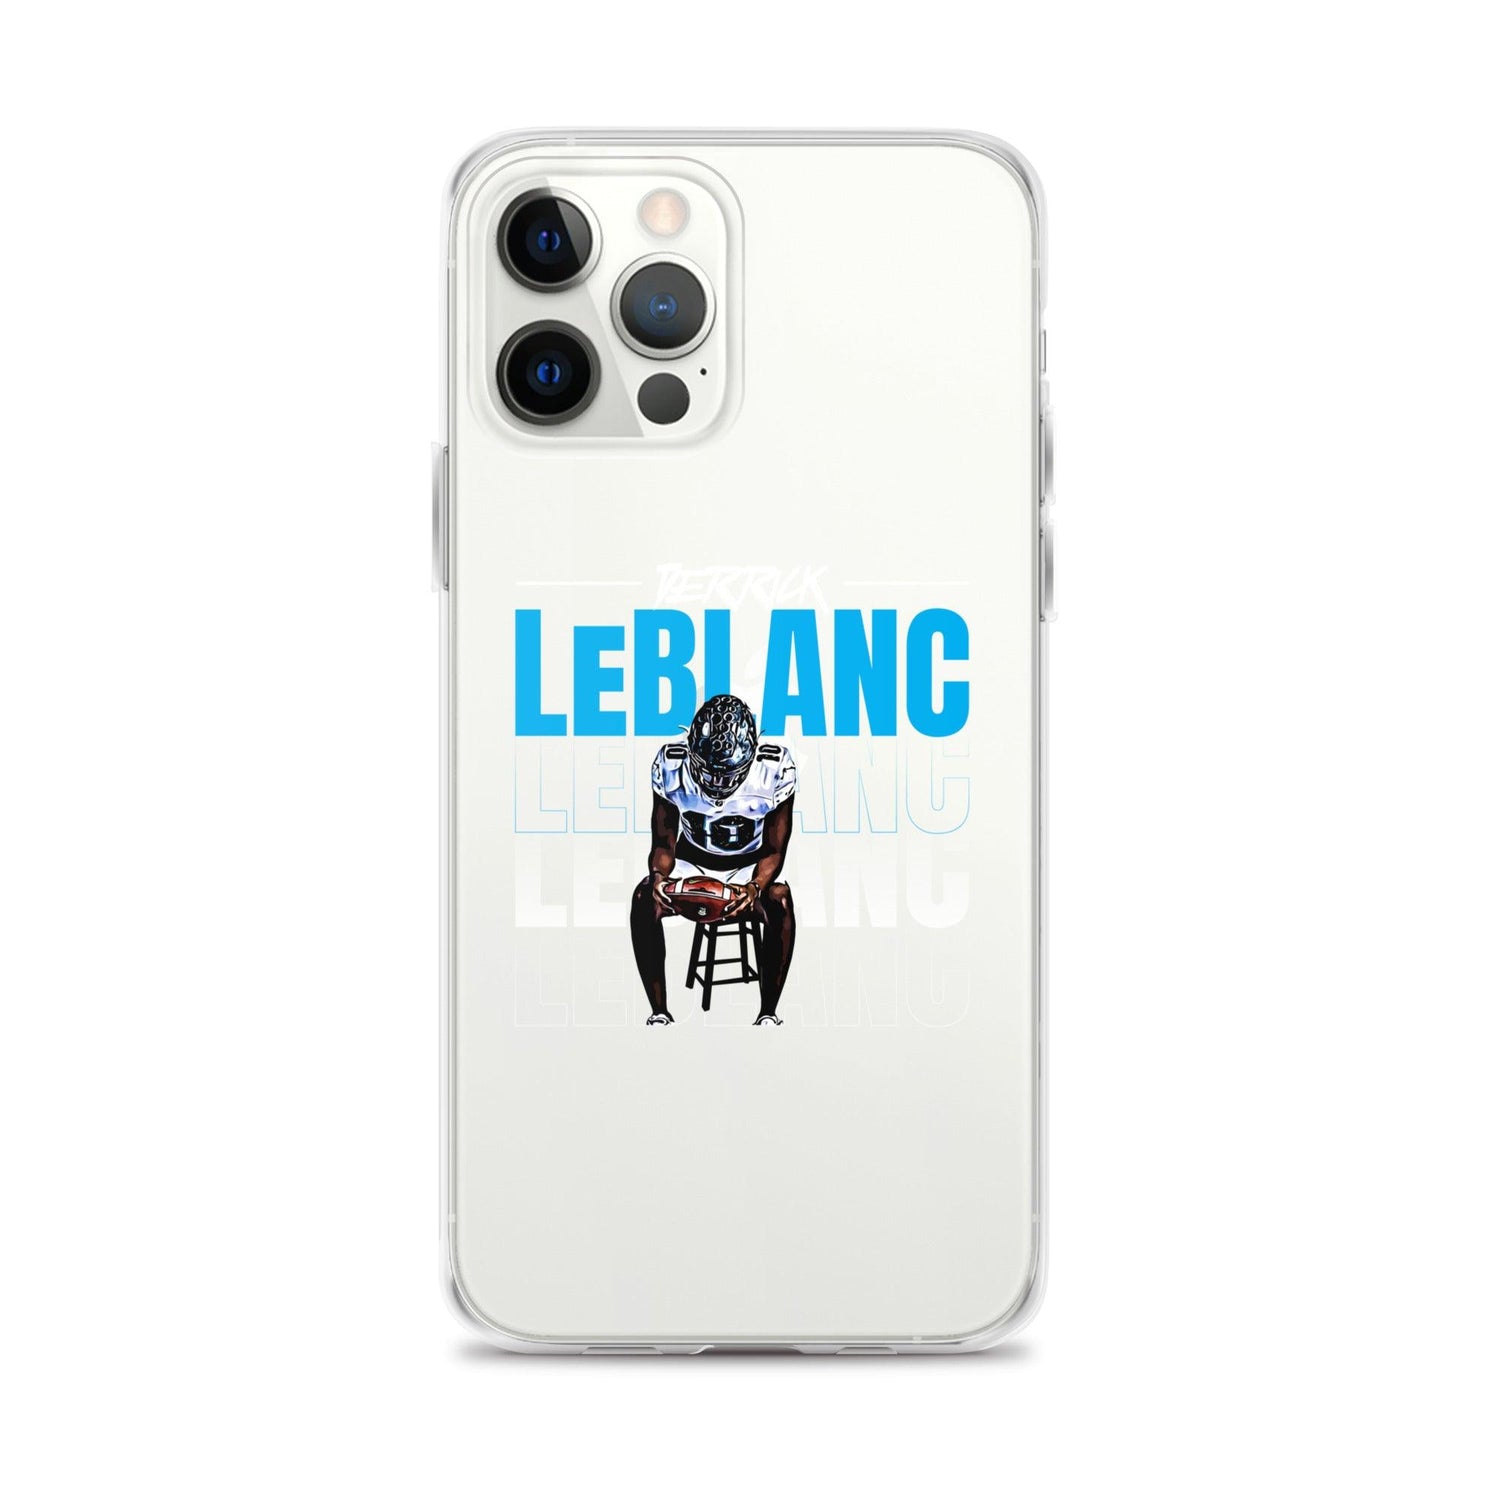 Derrick LeBlanc "Gameday" iPhone® - Fan Arch